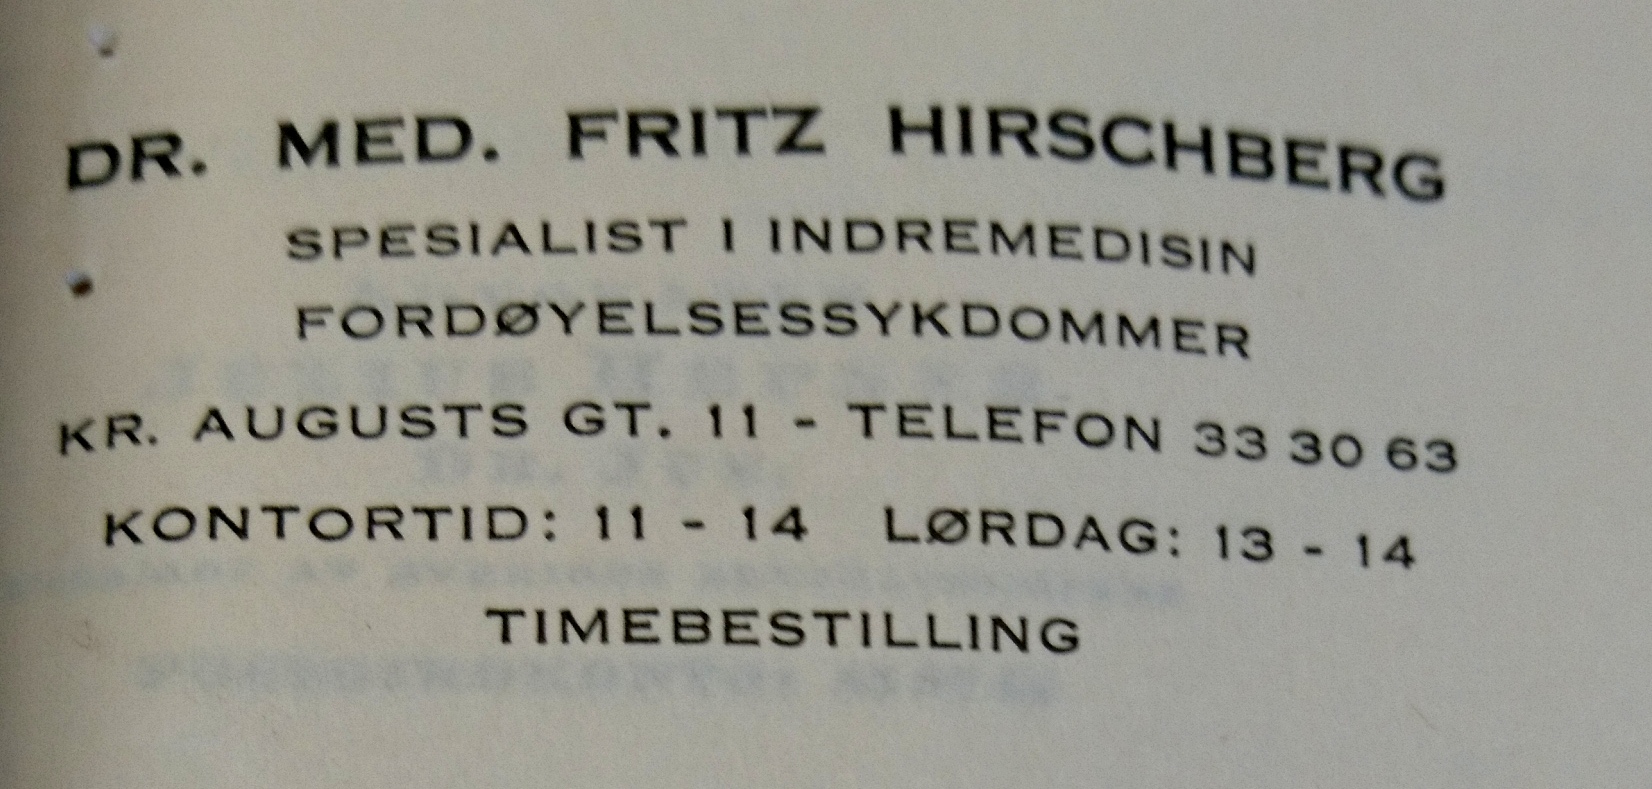 Address of Hirschberg's practice in Oslo in the 1950s, source: Compensation Authority Berlin